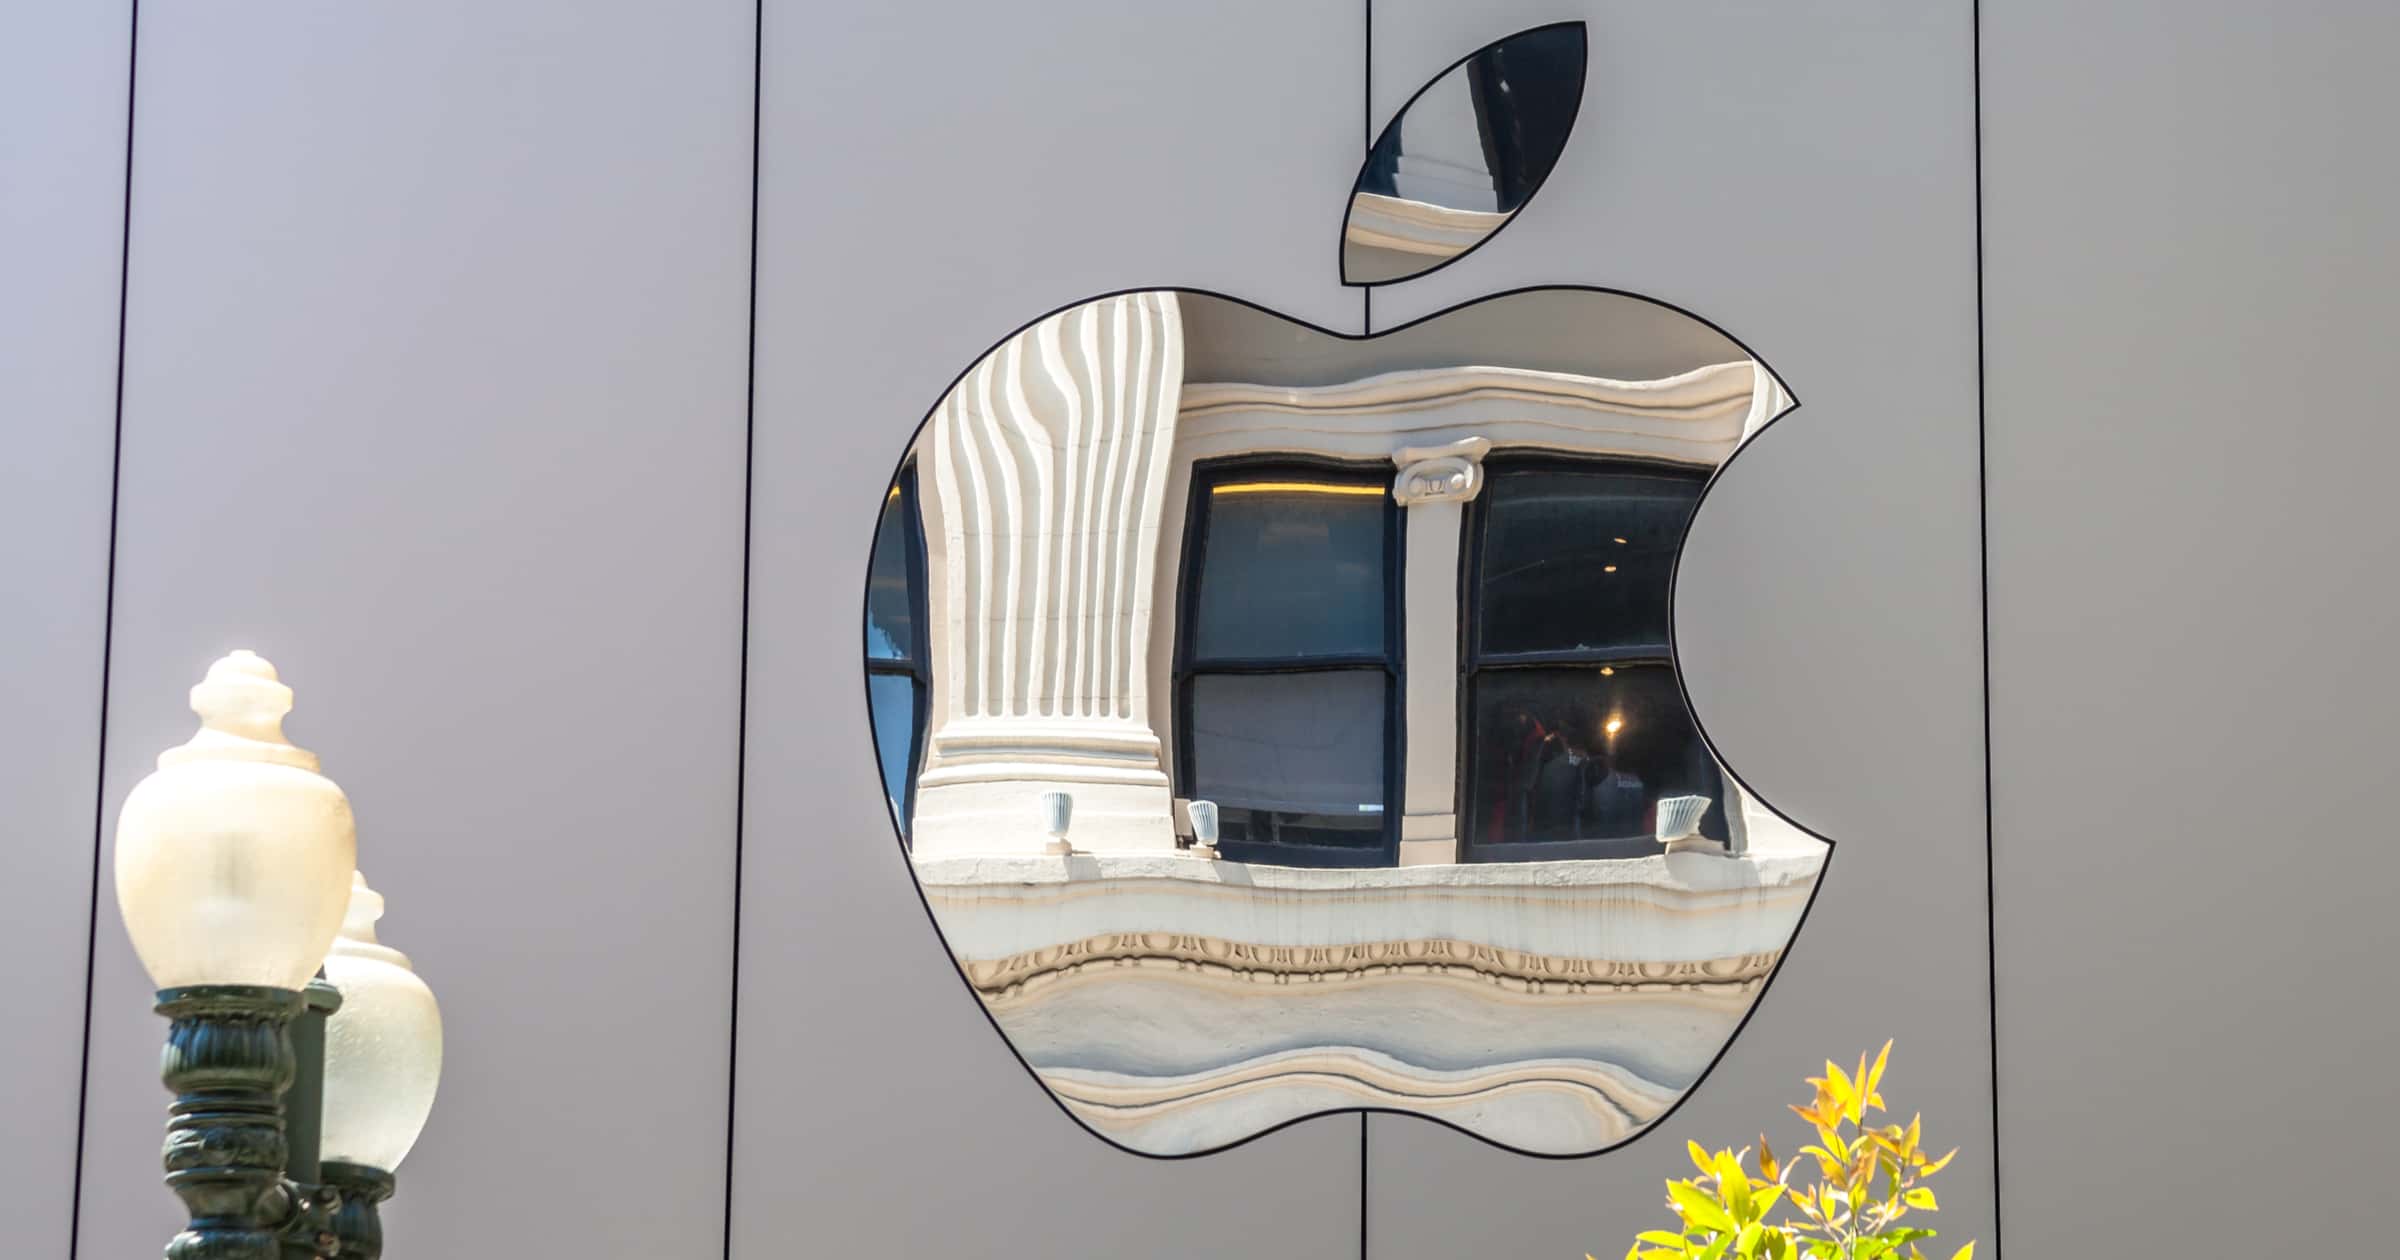 Apple announces plan to build $1 billion campus in Texas